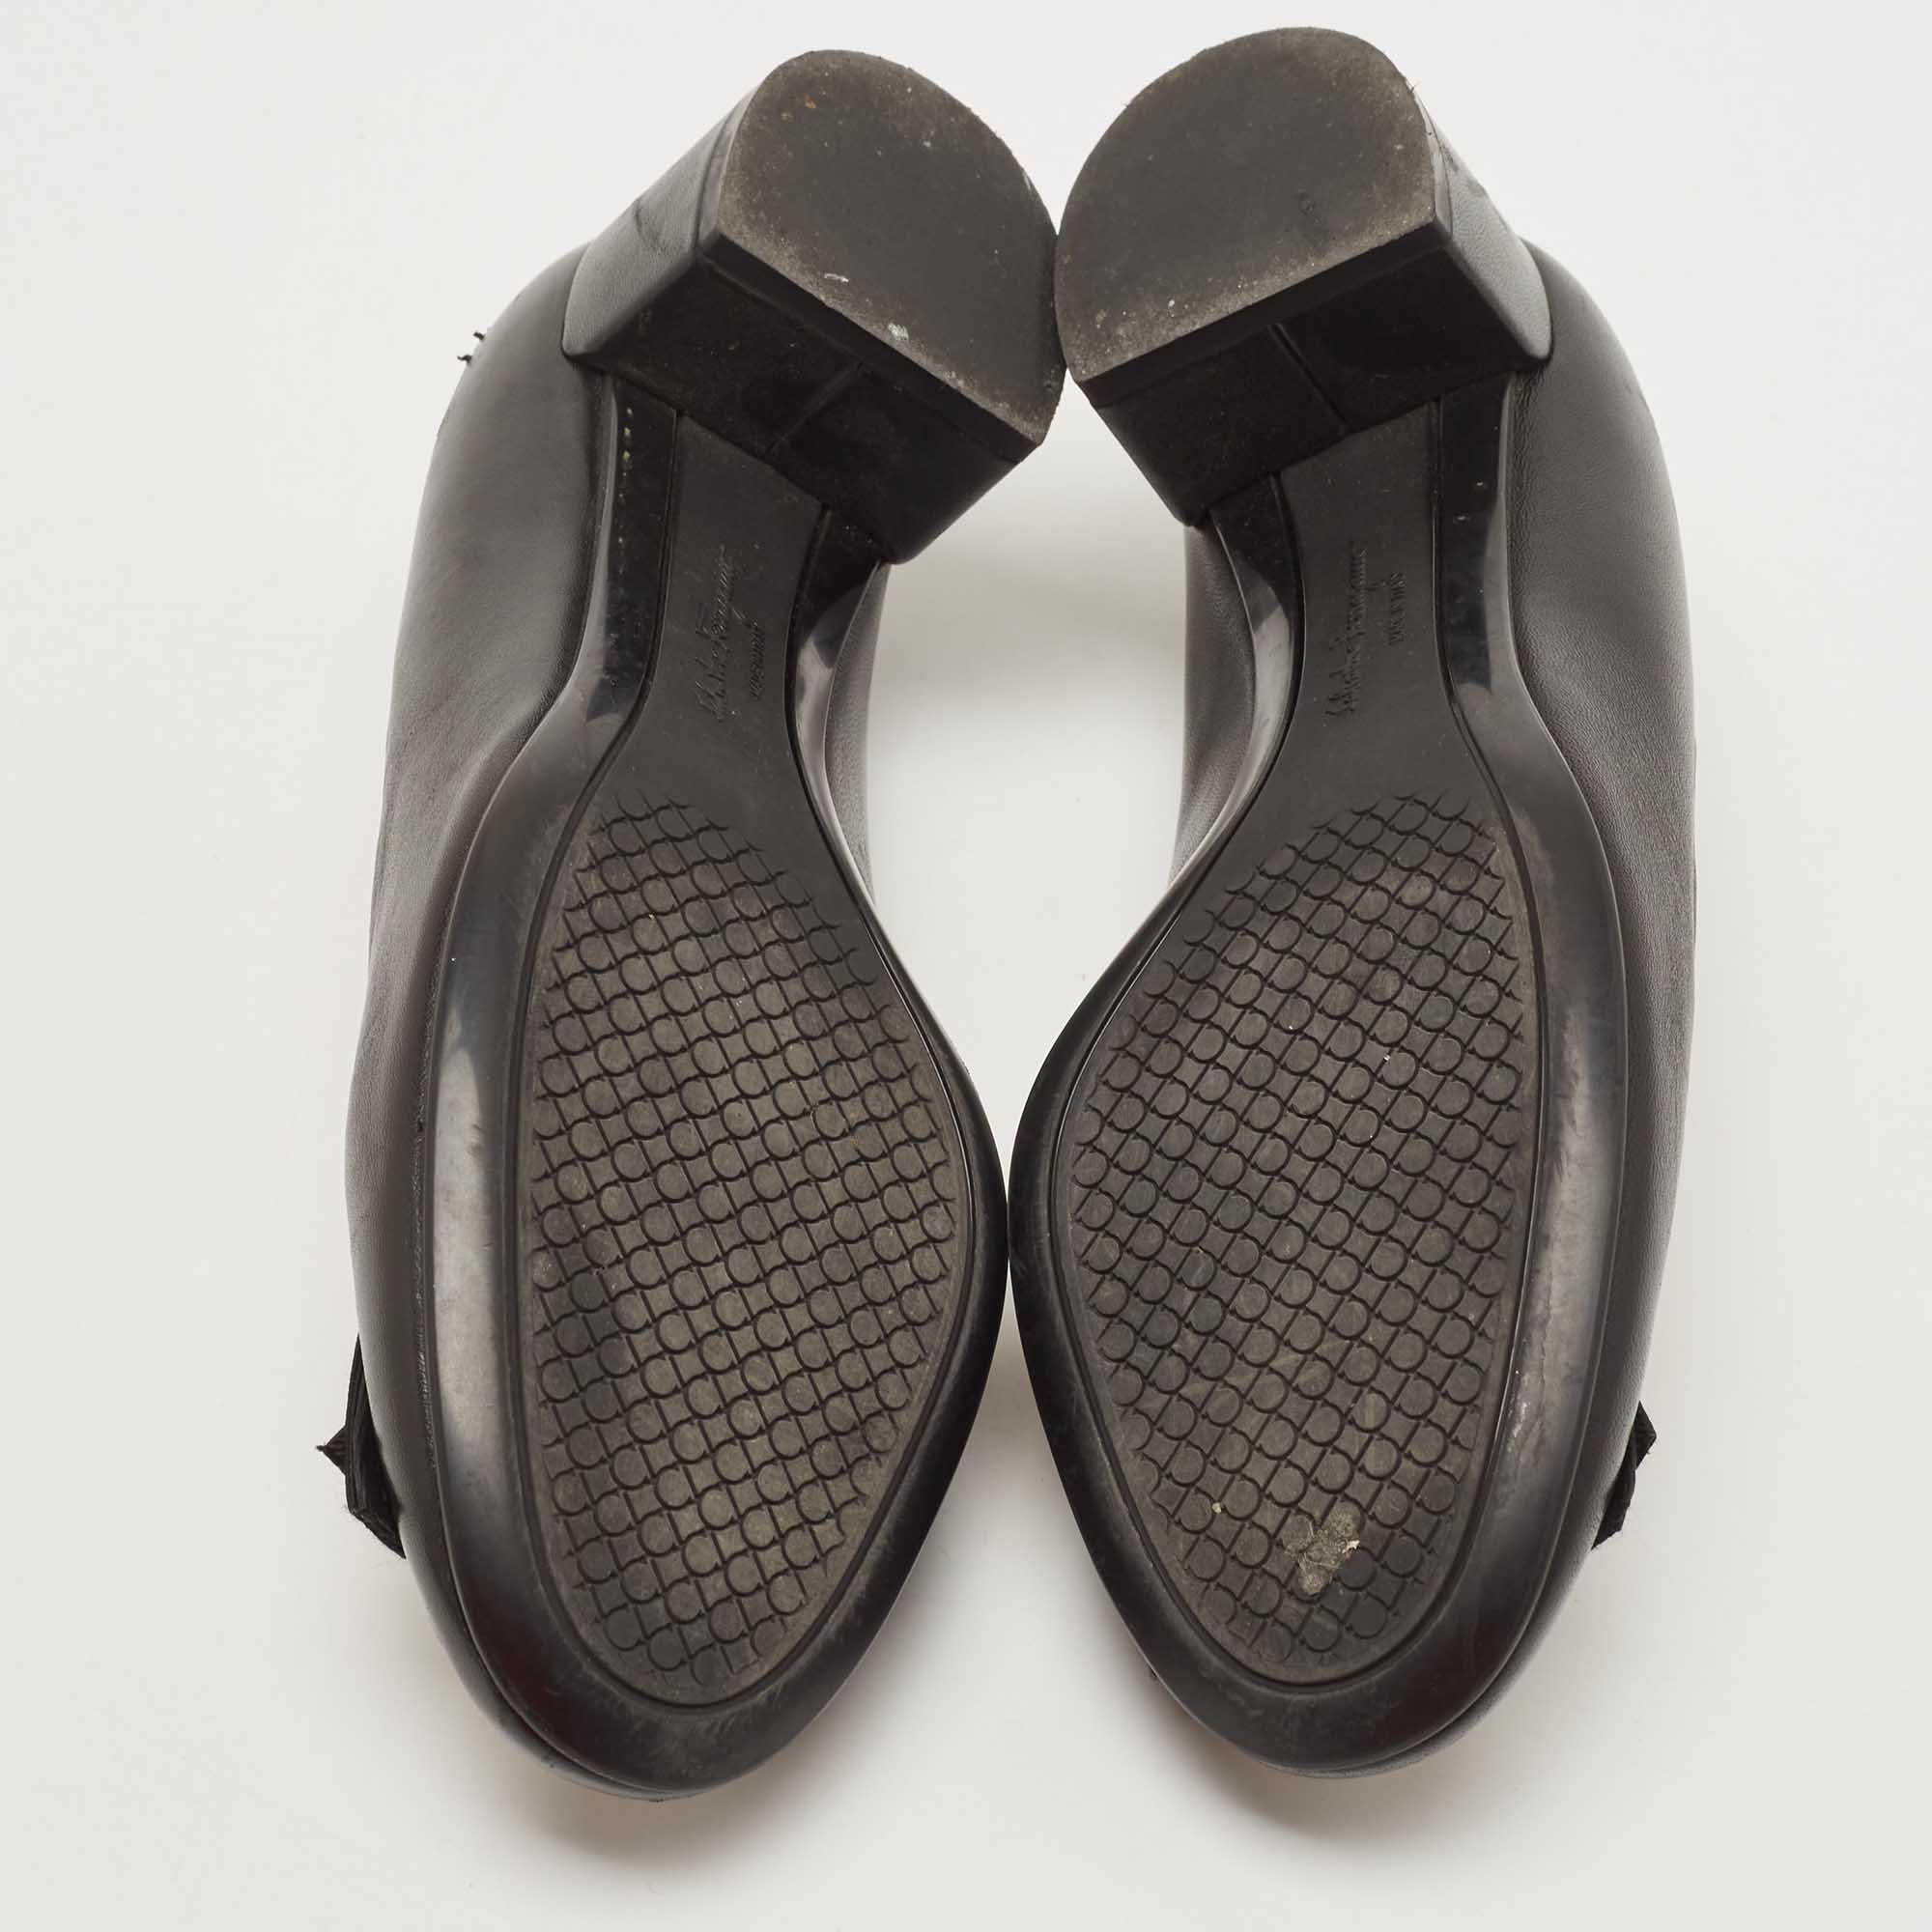 Salvatore Ferragamo Black Leather Flair Block Heel Pumps Size 40